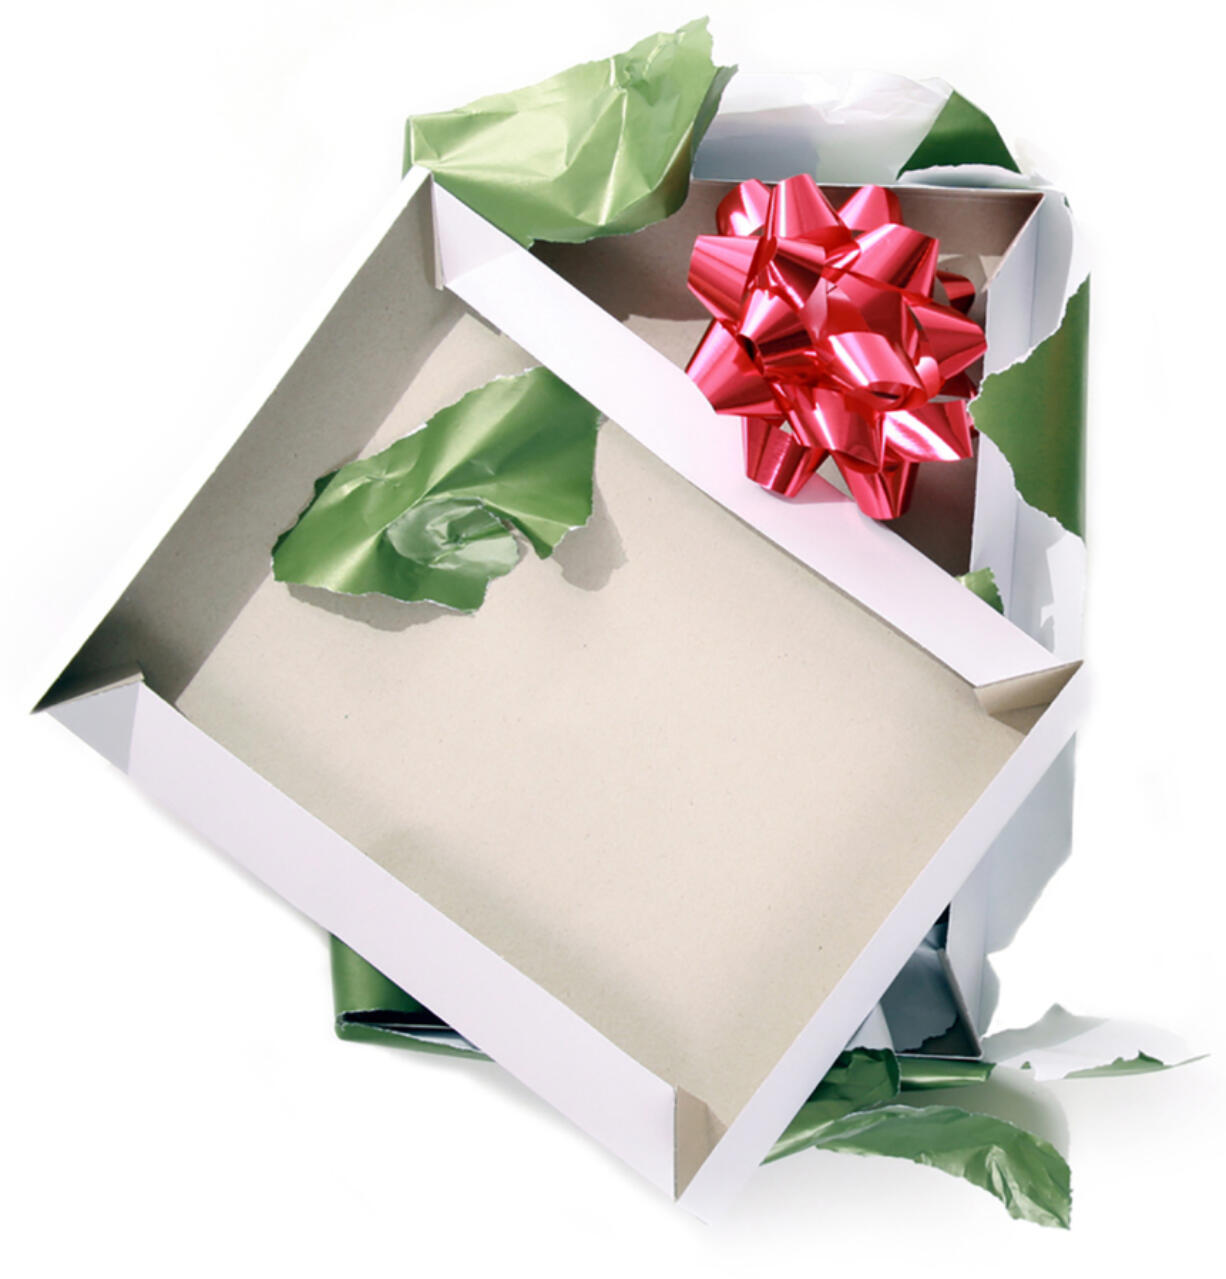 istock.com photo of unwrapped present.